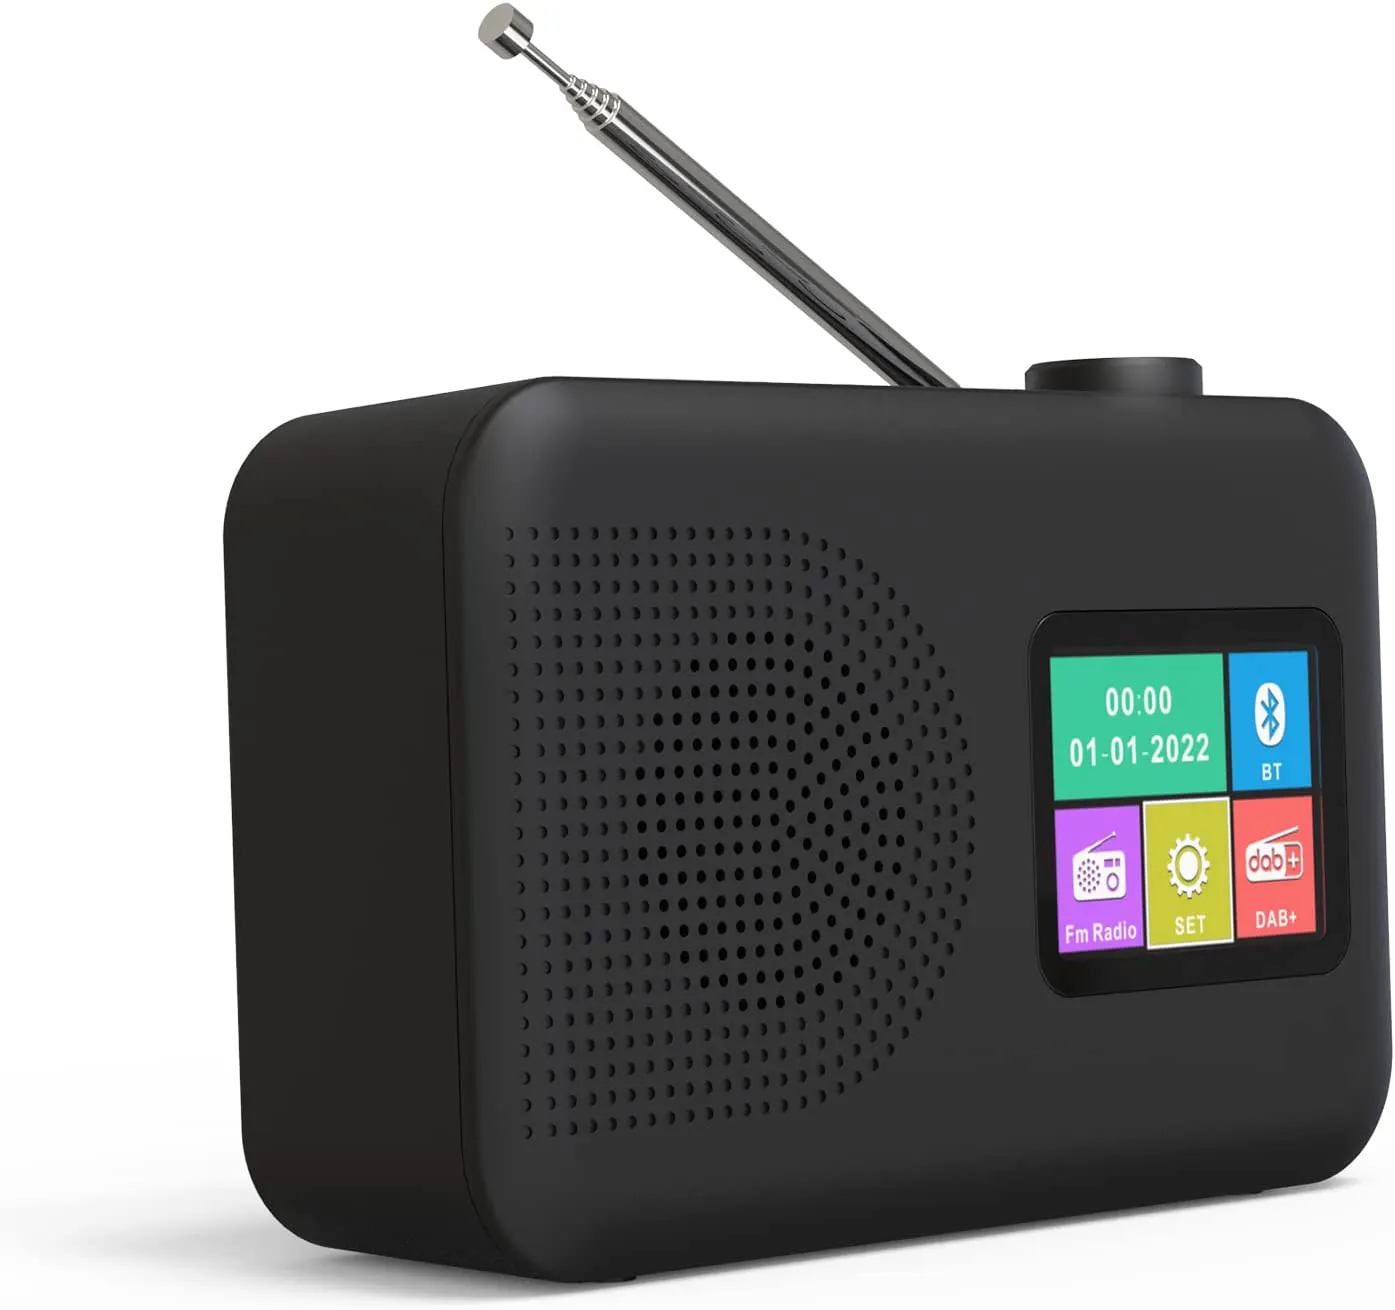 30 FM DAB preset stations 8 language mode display Radio with Sleep Timer Streaming Music by Bluetooth